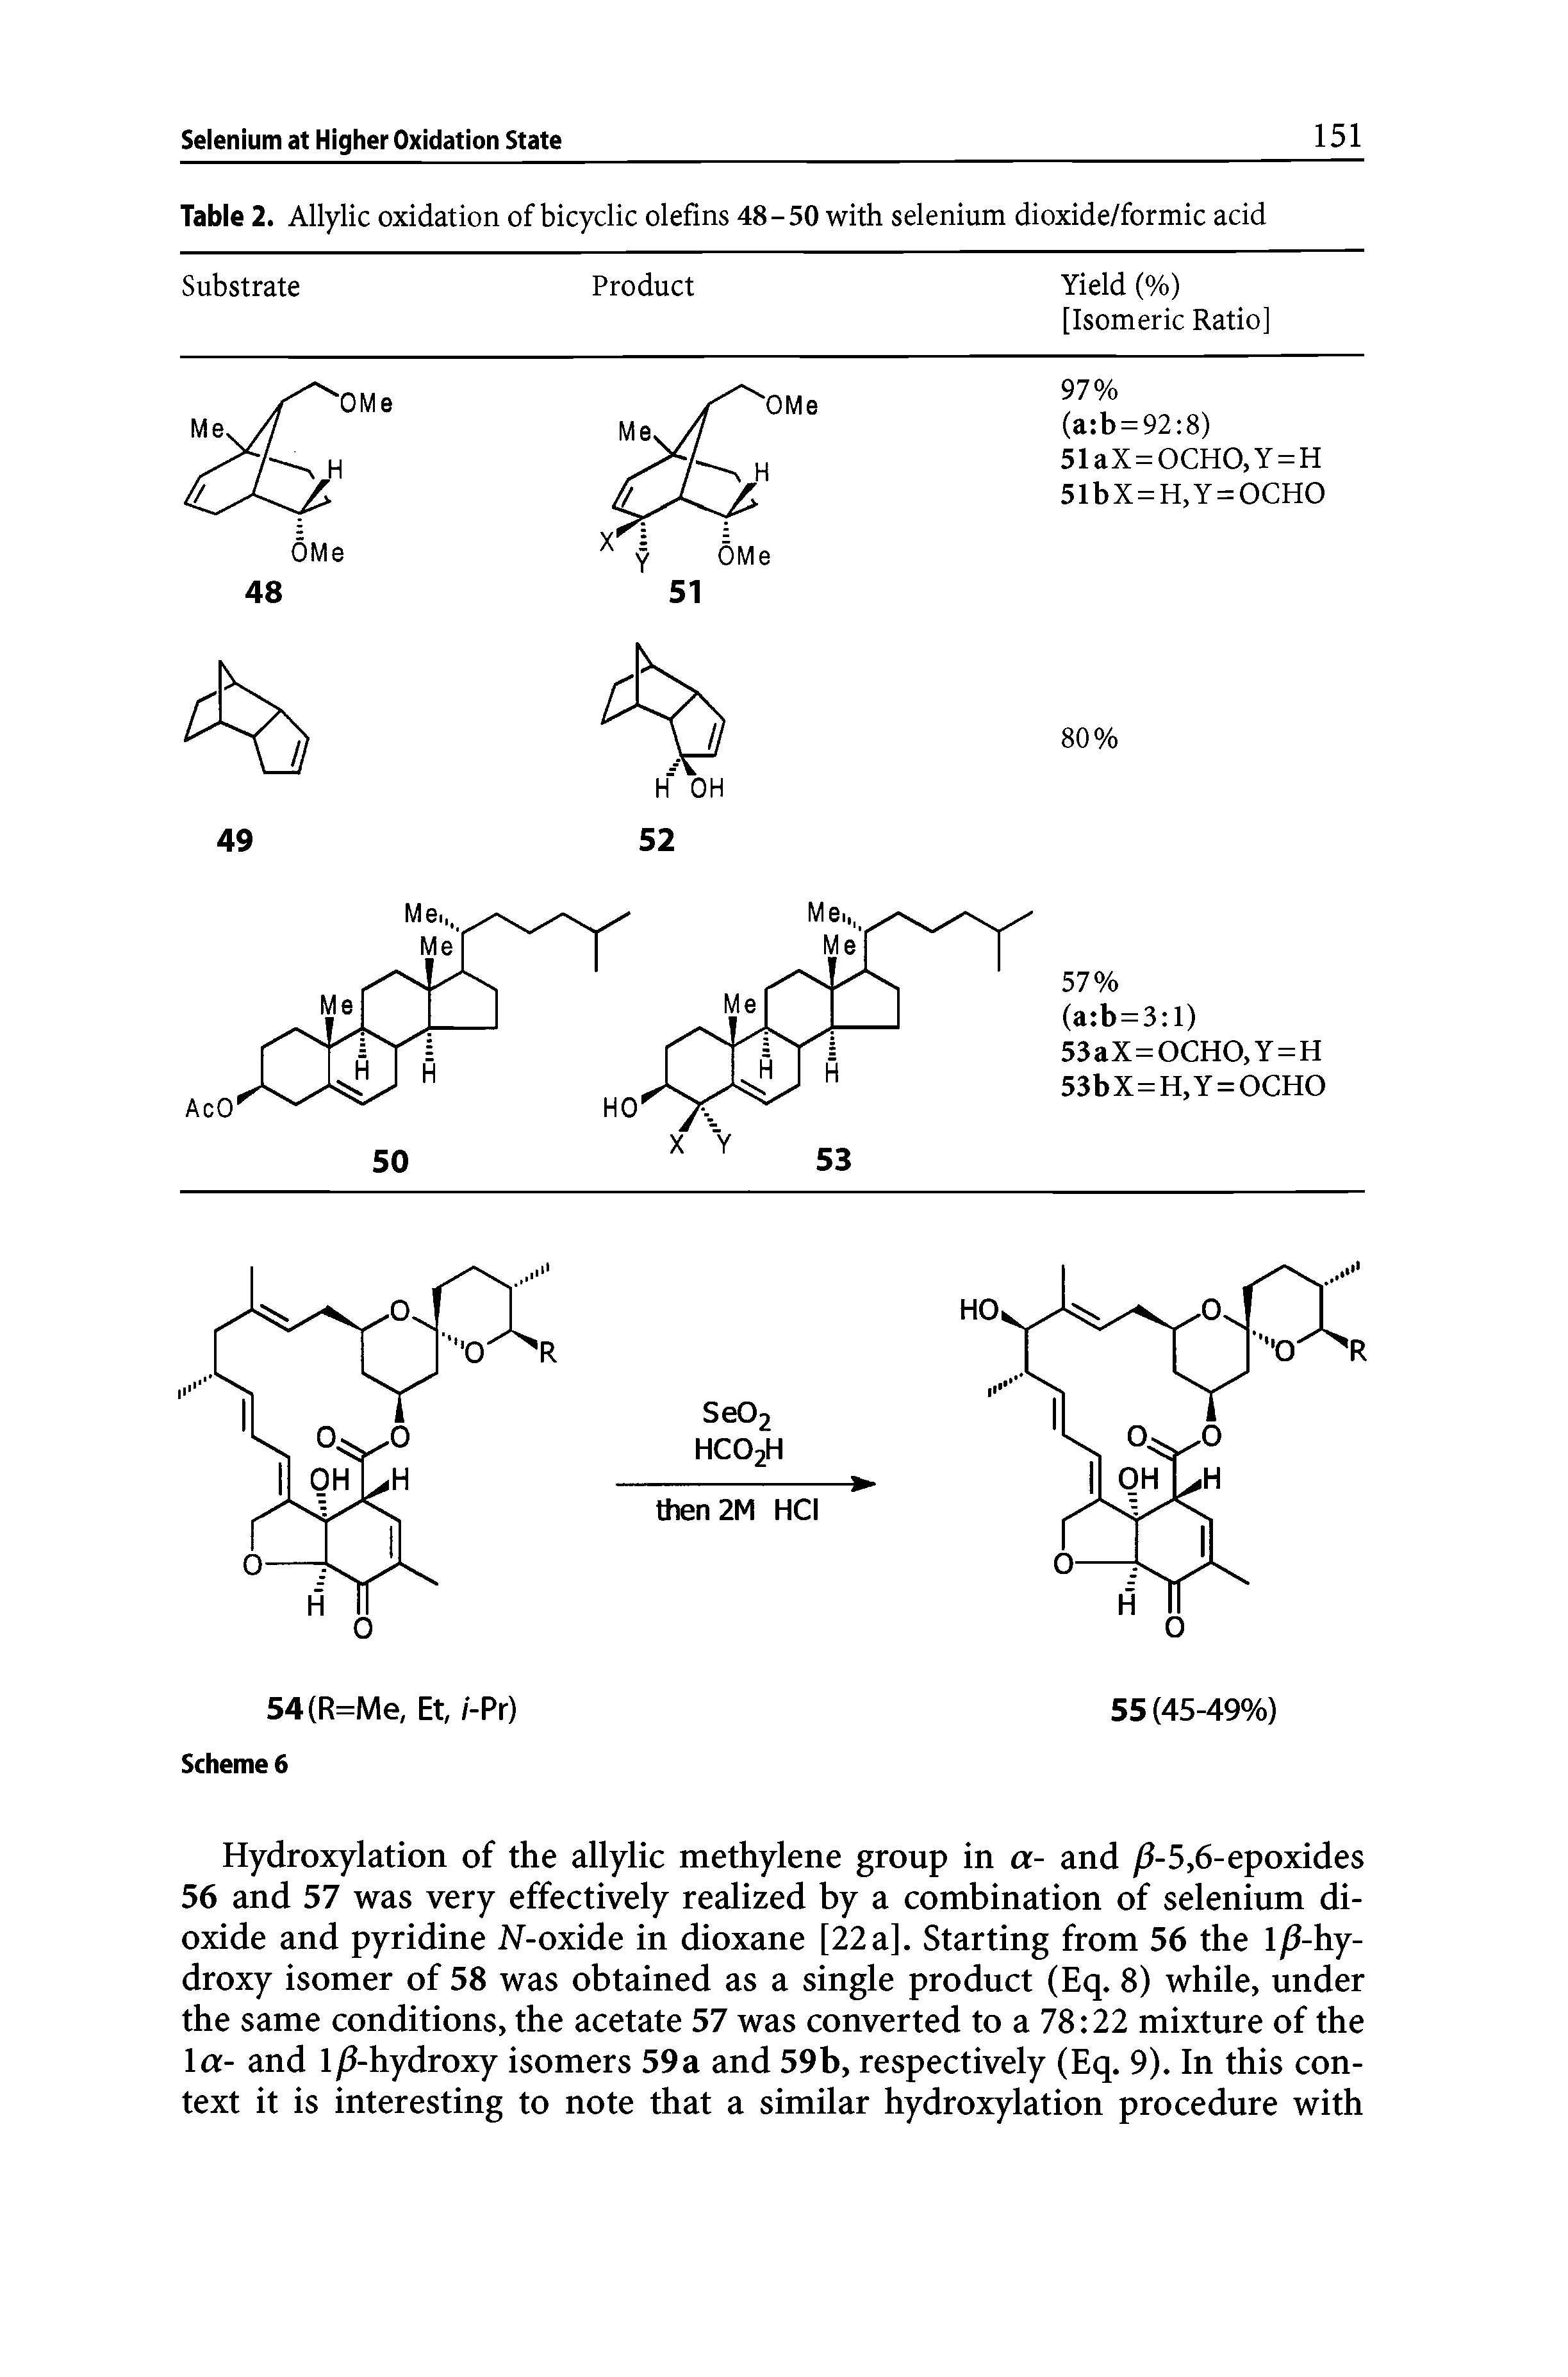 Table 2. Allylic oxidation of bicyclic olefins 48-50 with selenium dioxide/formic acid...